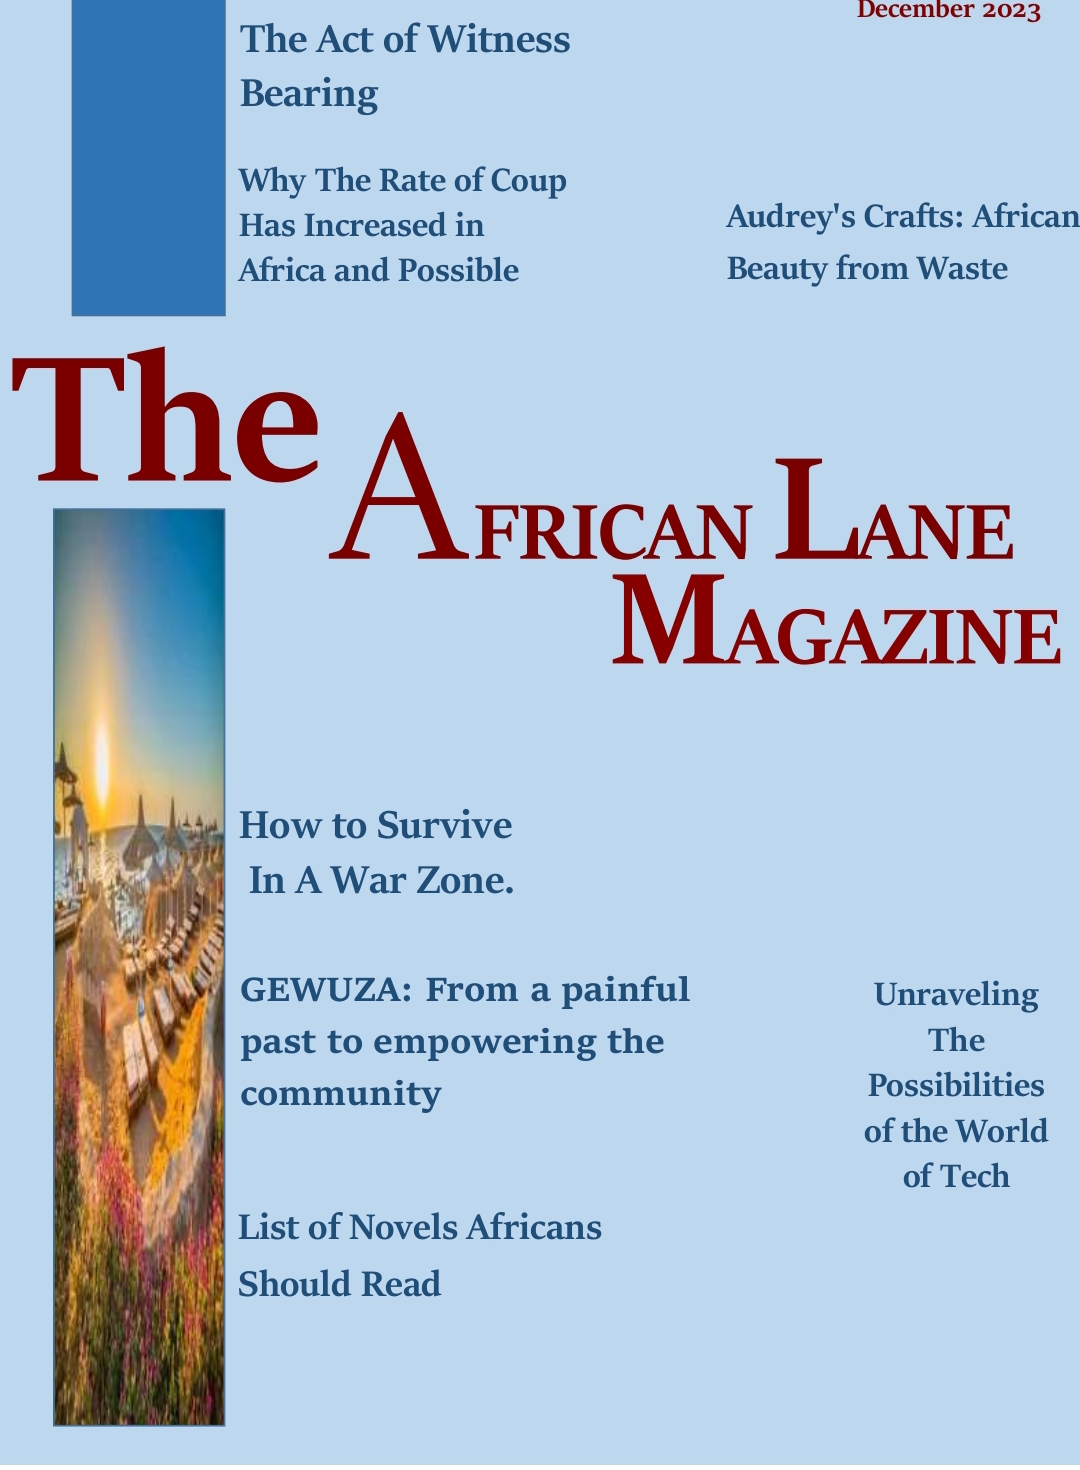 The African Lane Magazine's third Edition